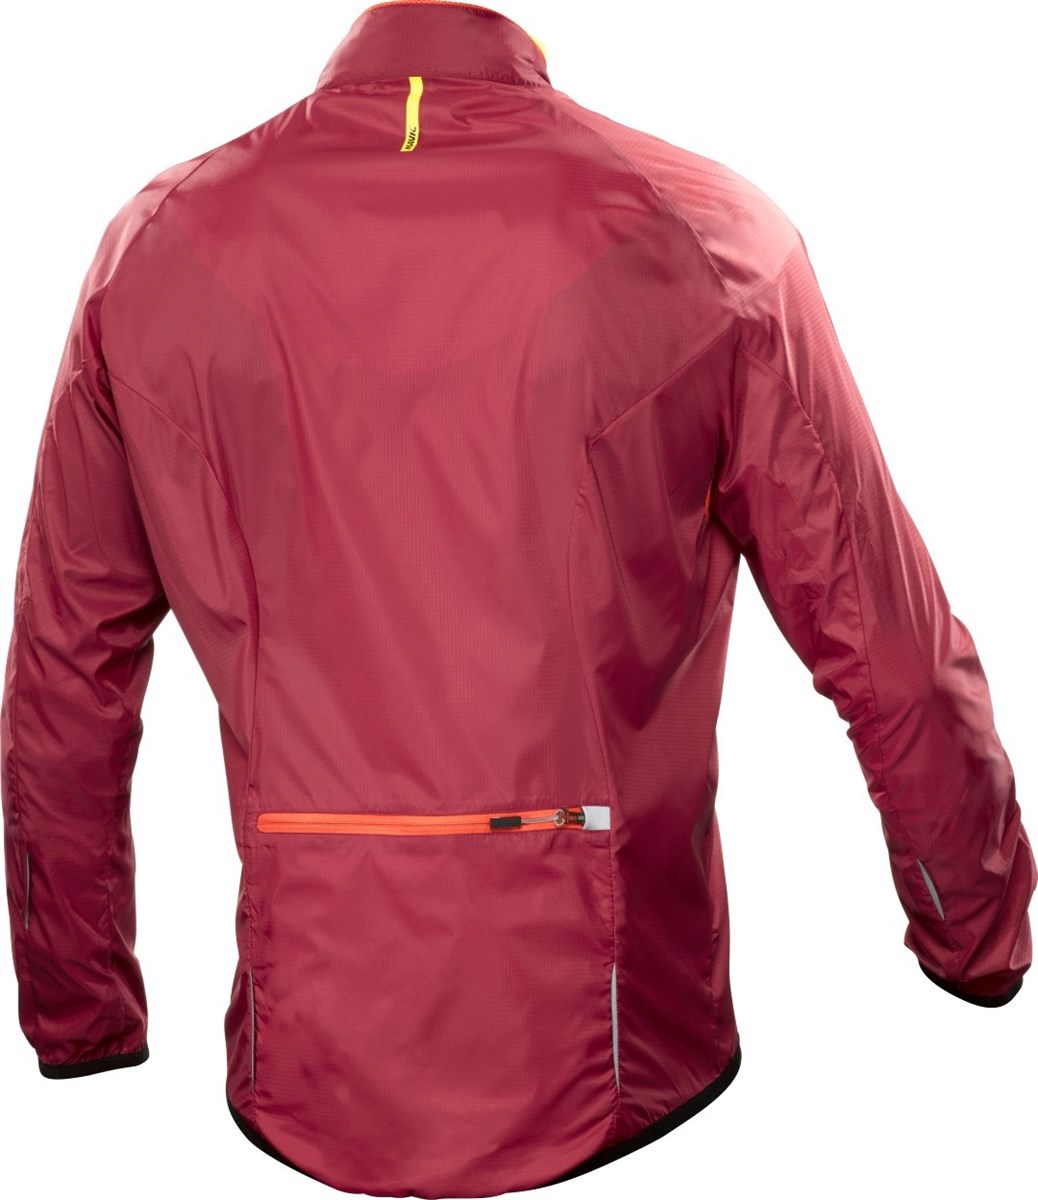 Mavic Aksium Windproof Jacket AW16